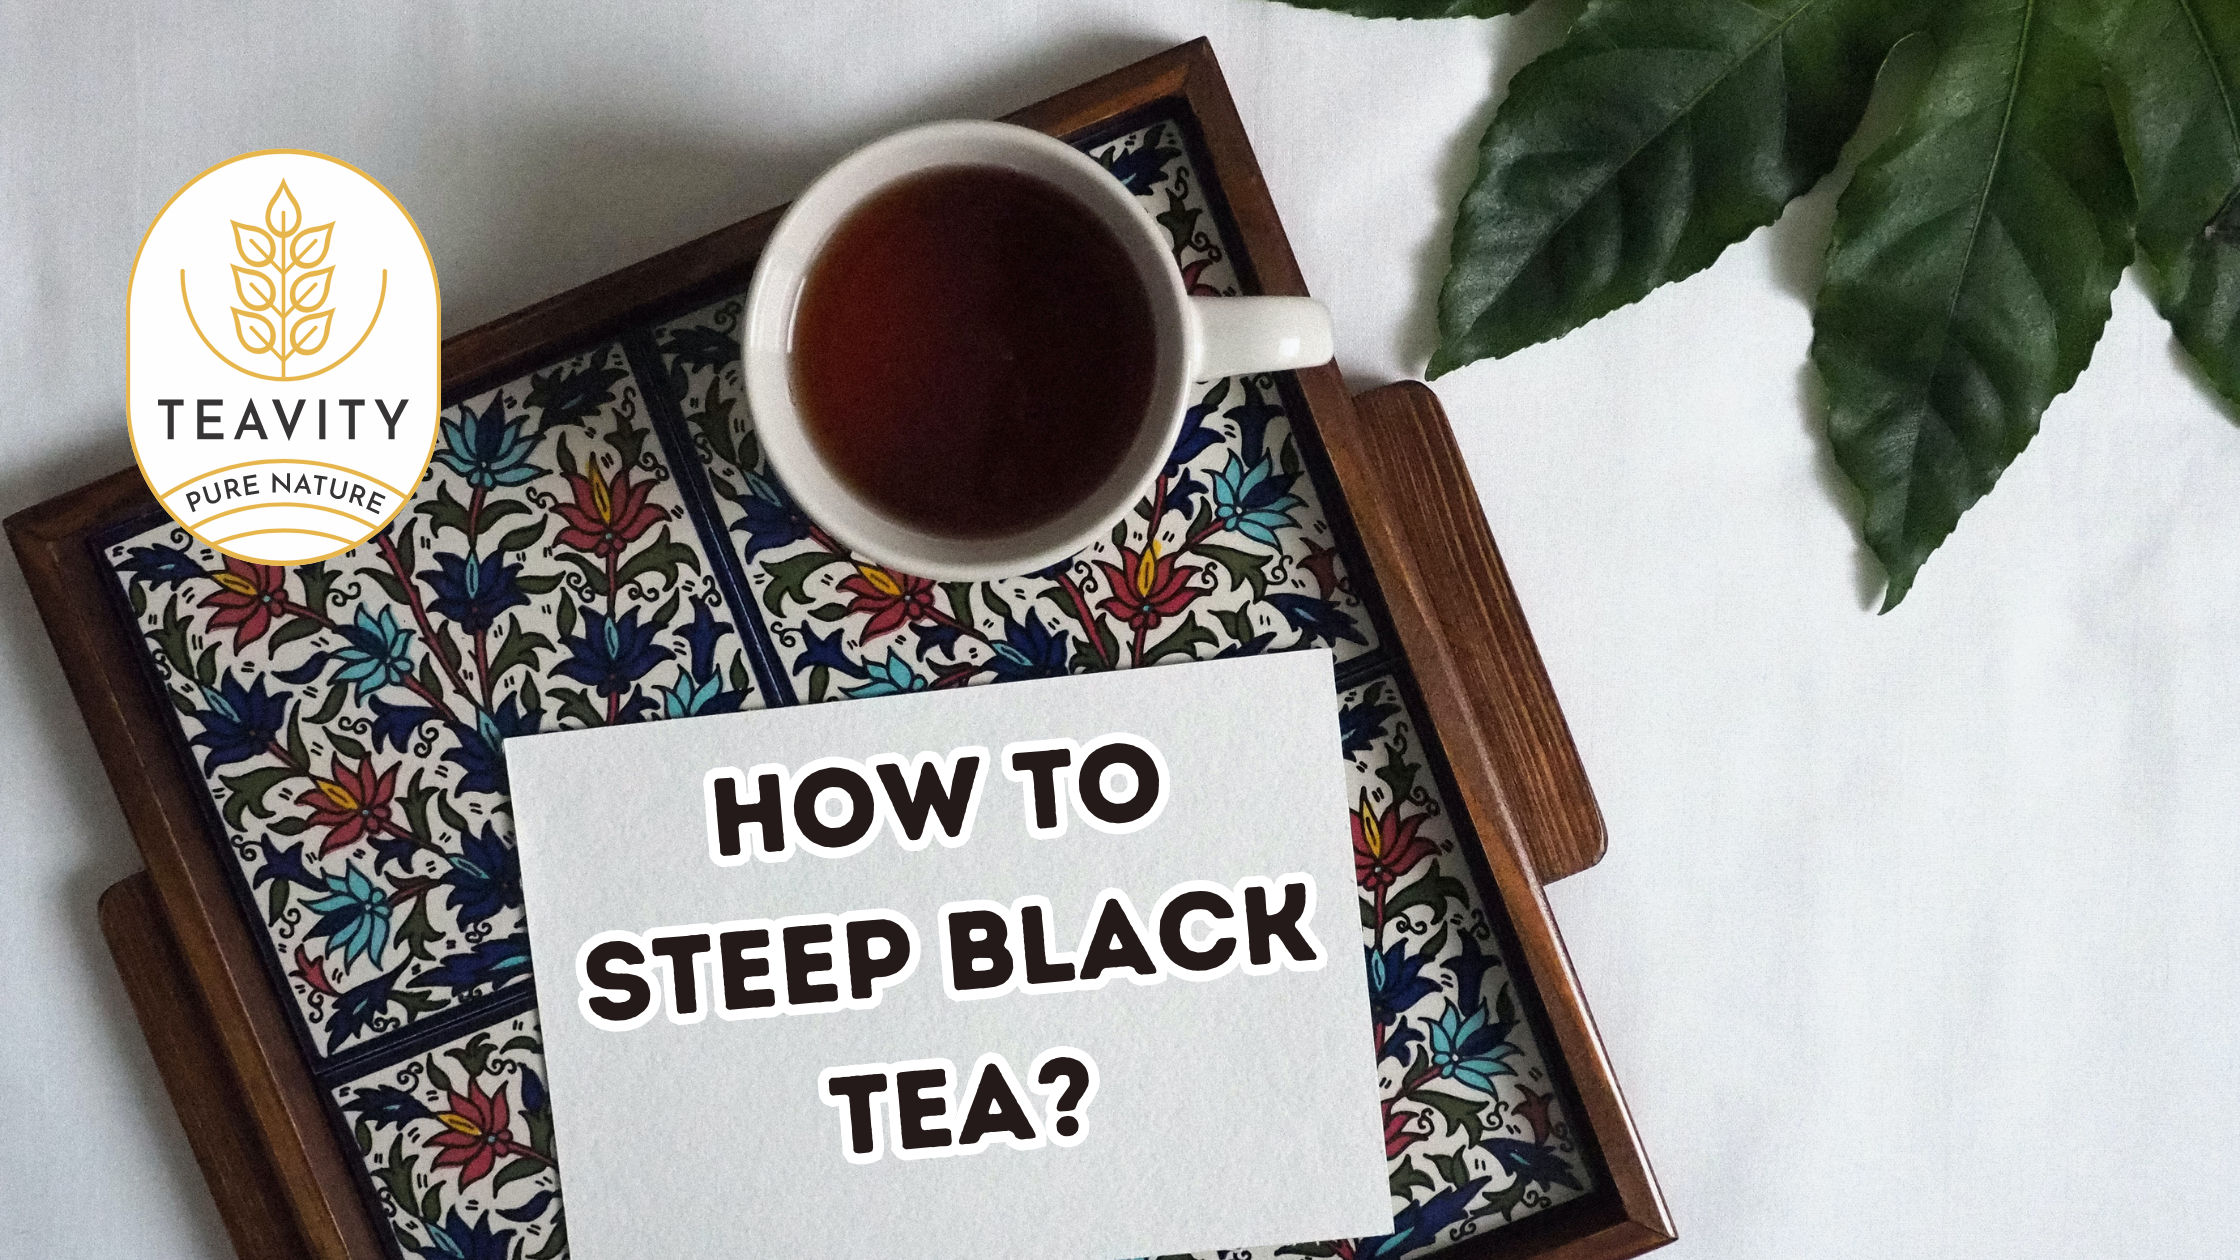 How to Steep Black Tea?